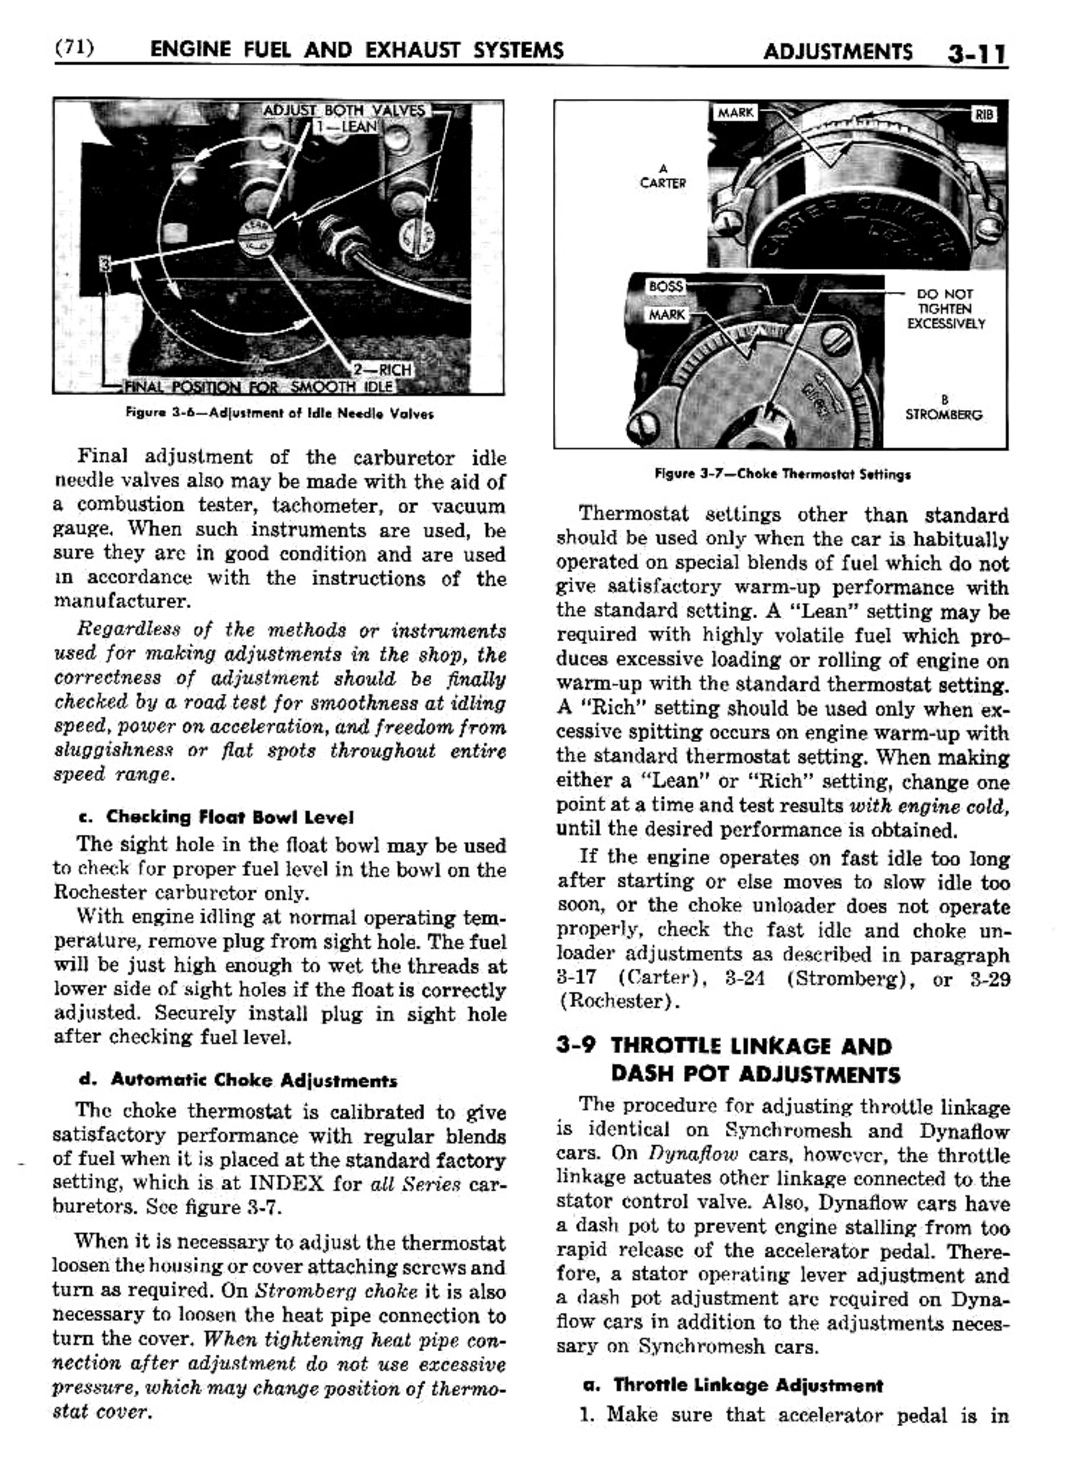 n_04 1956 Buick Shop Manual - Engine Fuel & Exhaust-011-011.jpg